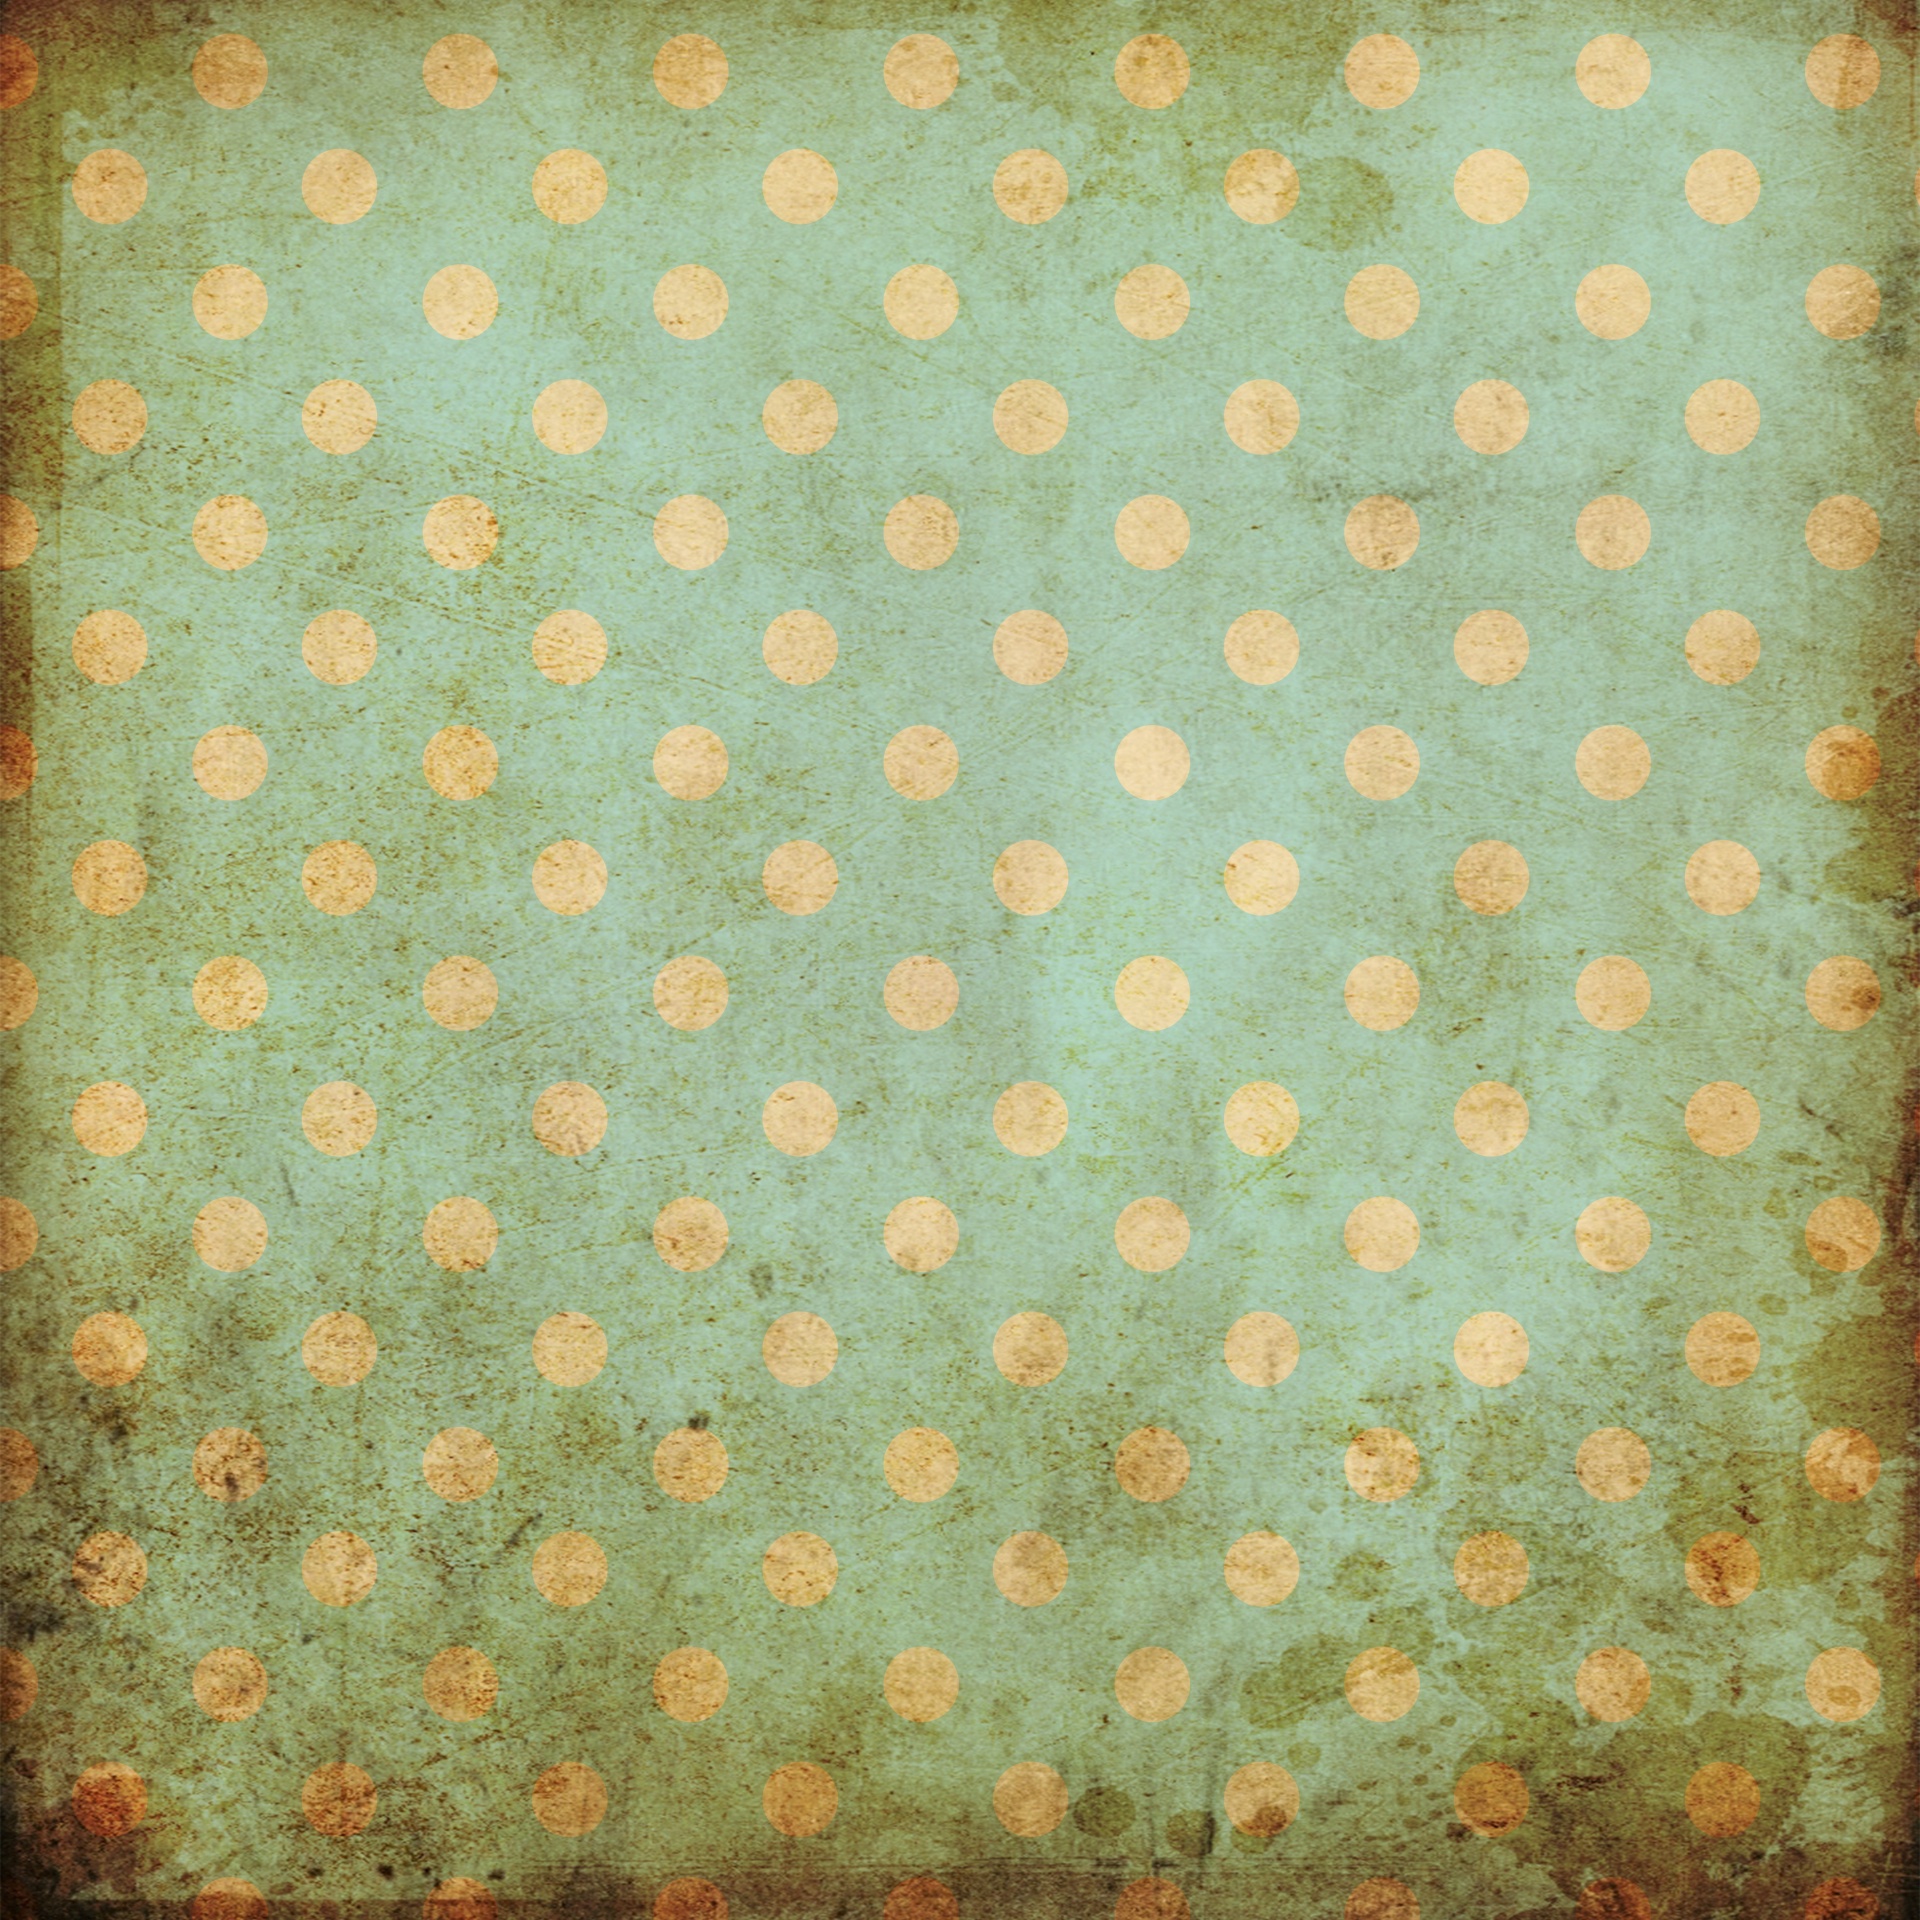 polka dots grunge wallpaper free photo